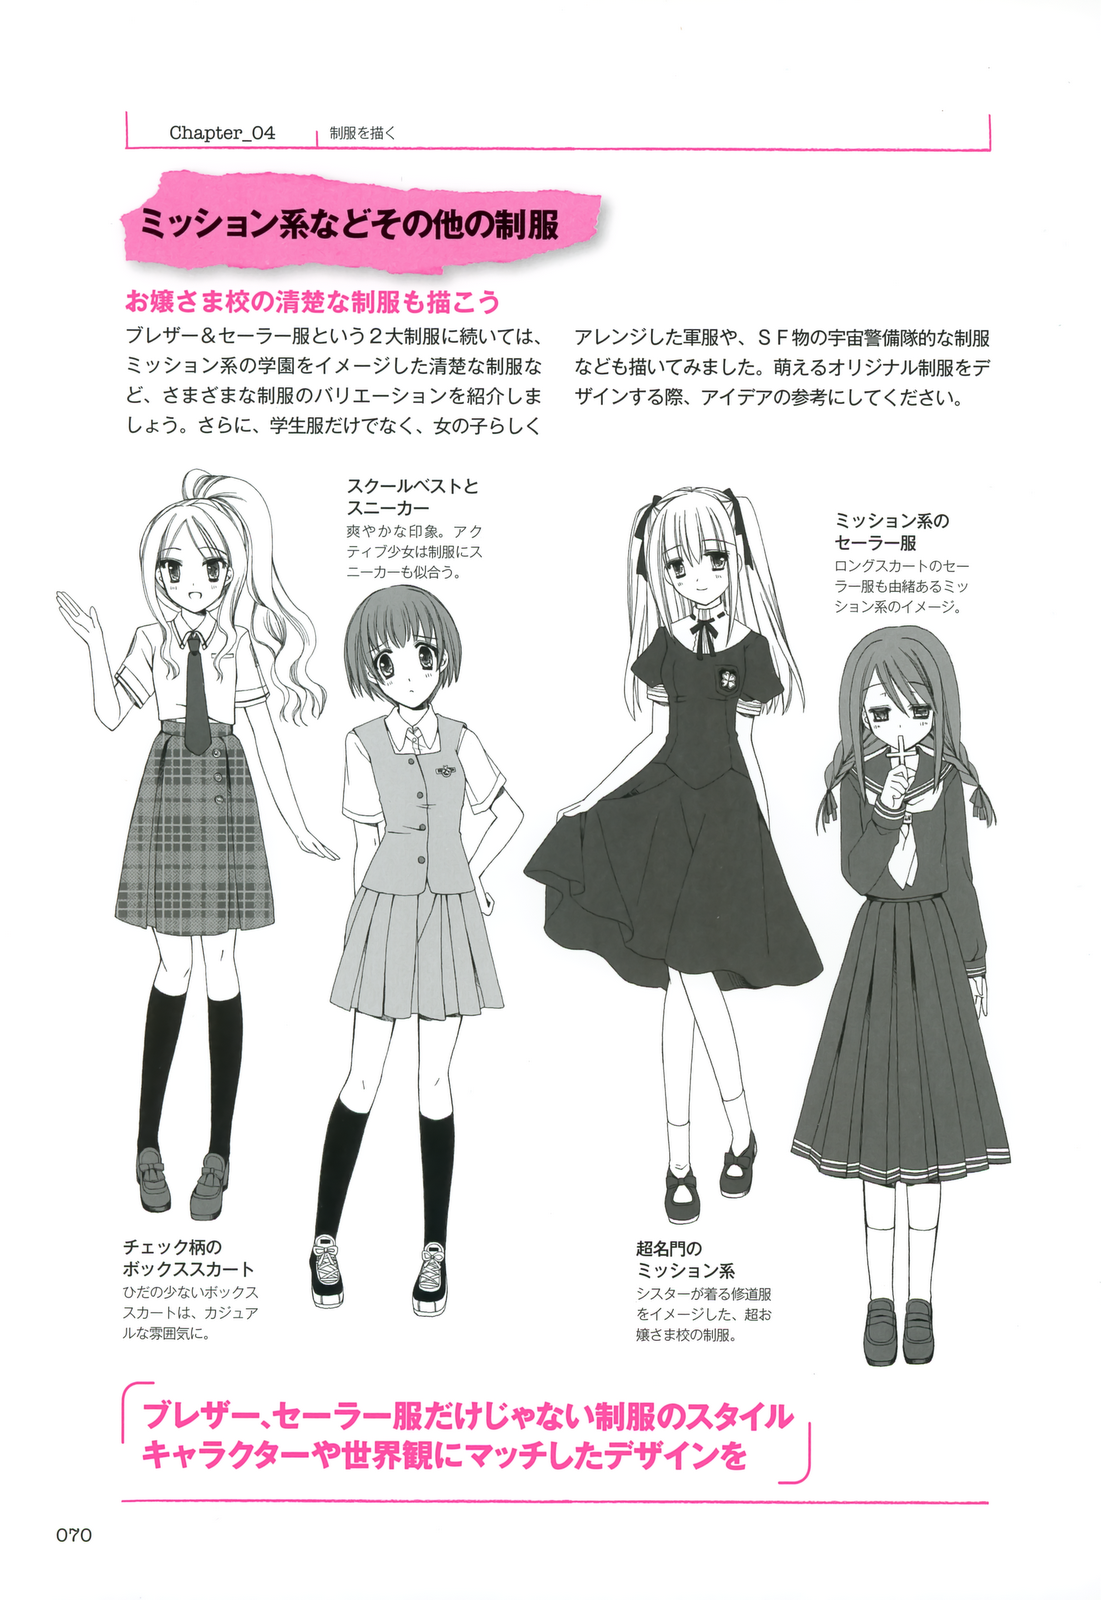 Komunitas Manga JGC How To Draw School Uniform Mendesain 